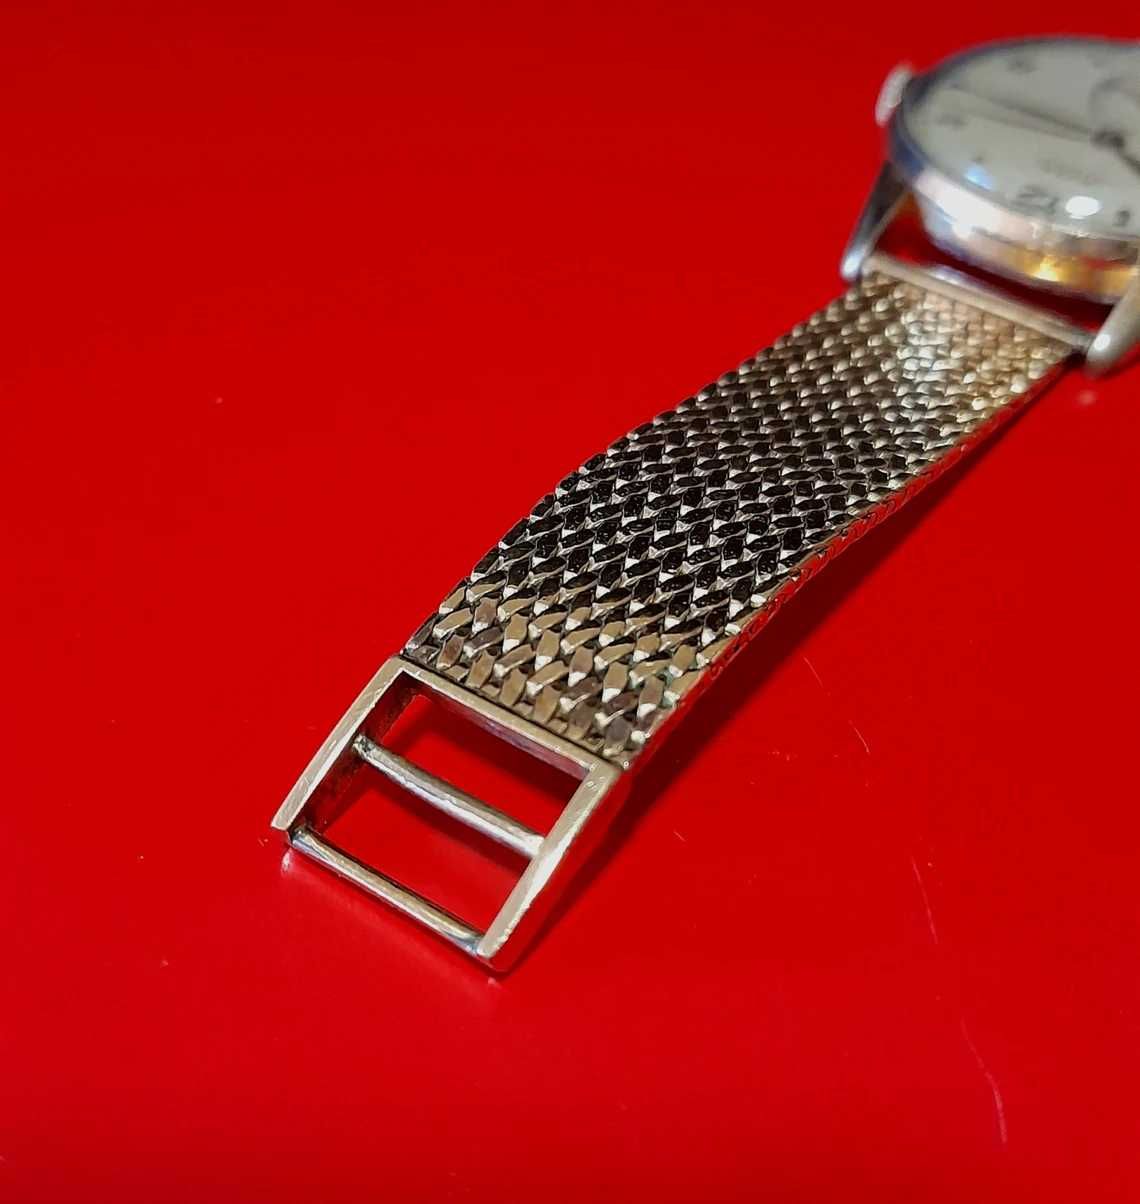 1950 винтидж Swiss Alfer мъжки ръчен часовник